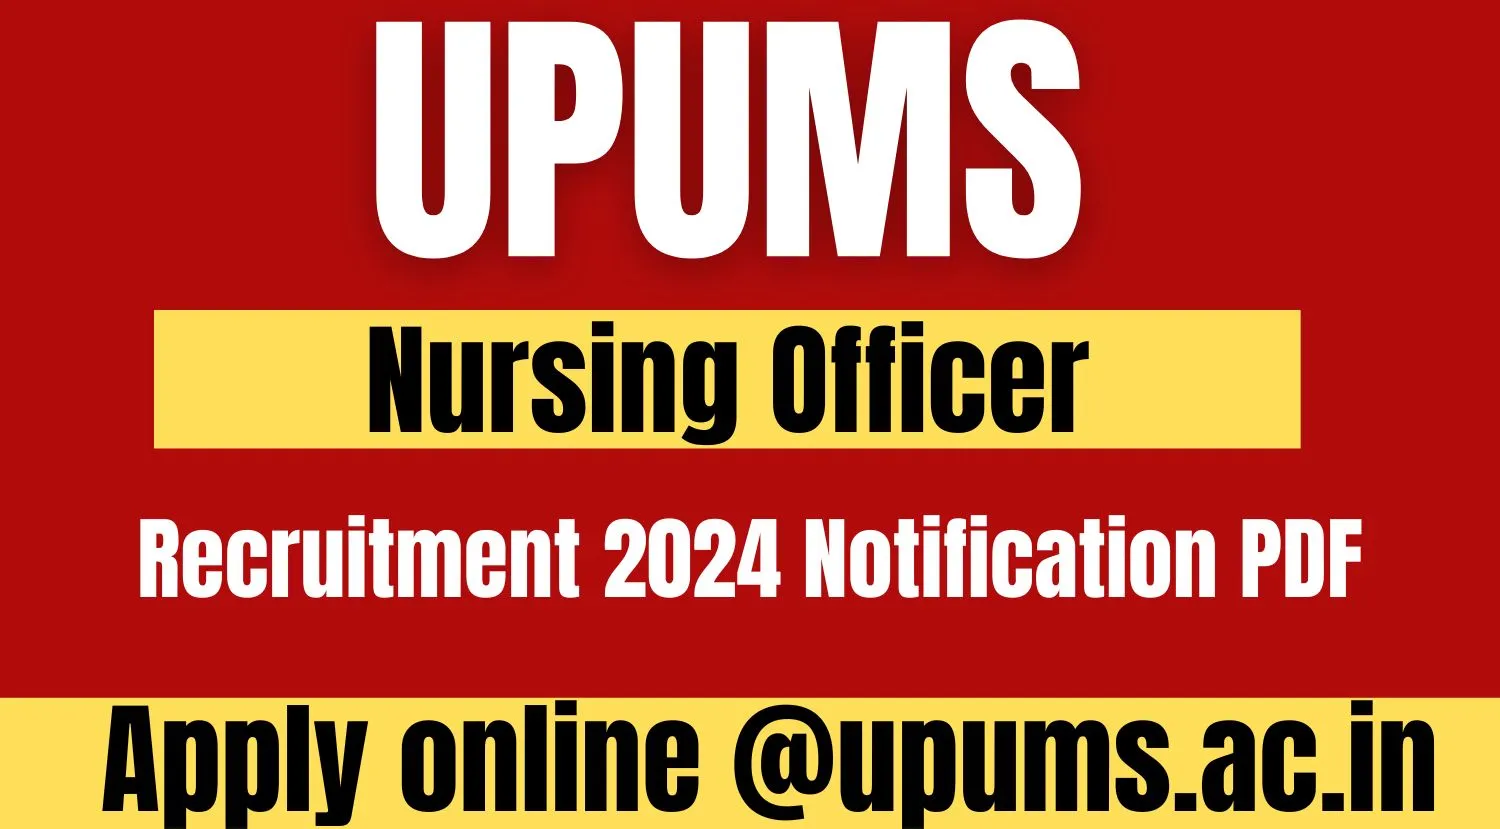 UPUMS Nursing Officer Online Form 2024